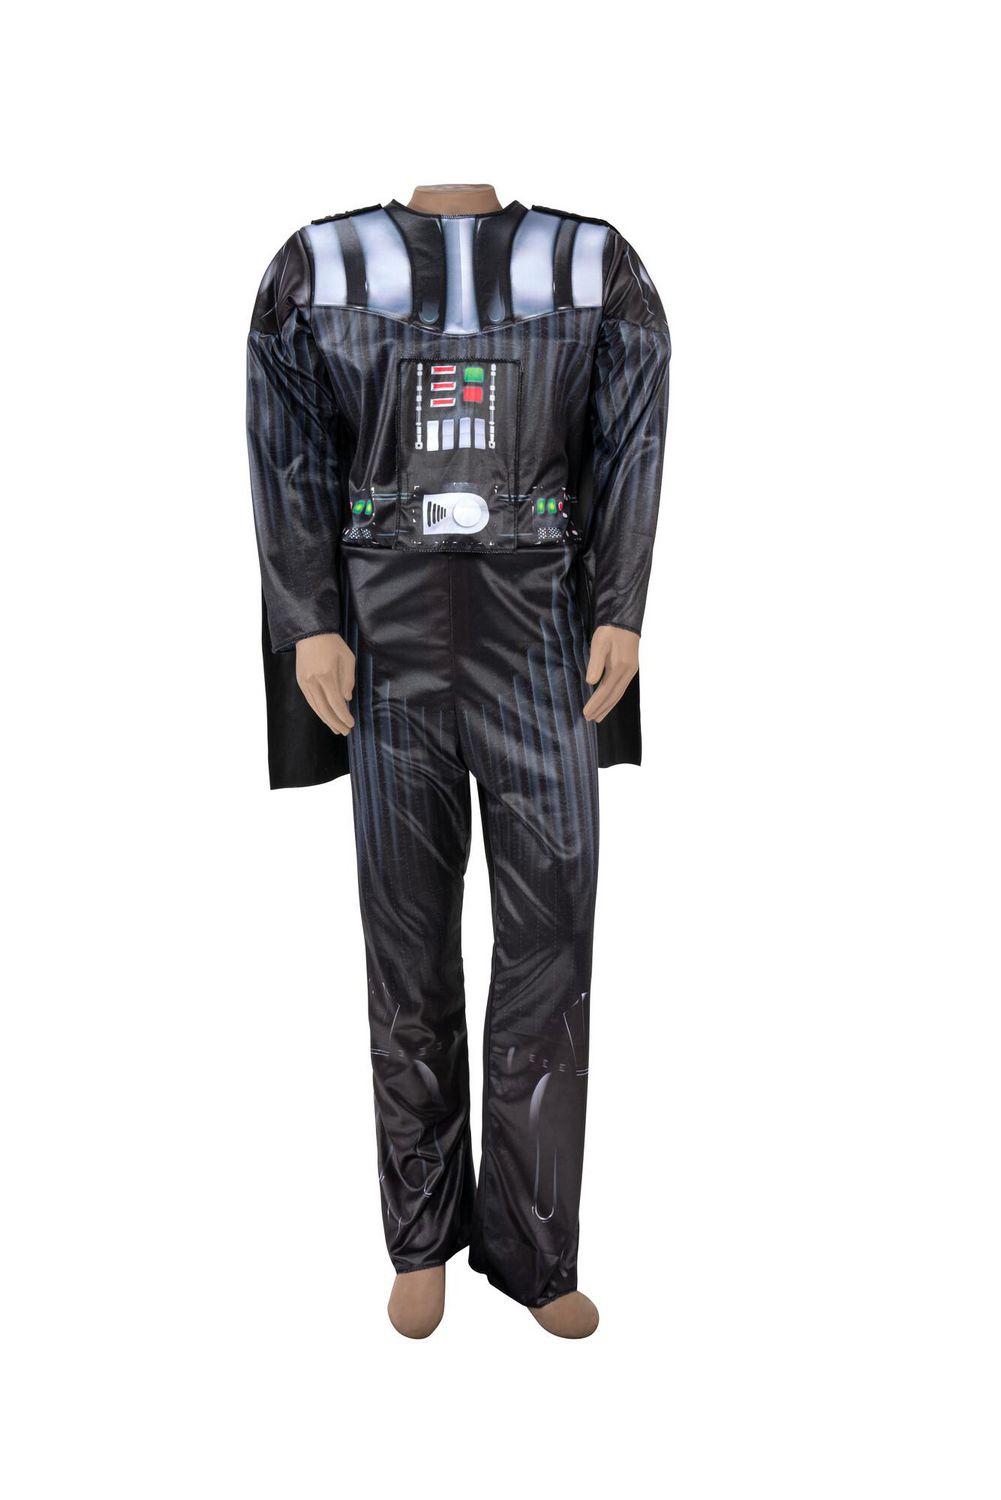 Darth Vader Adaptive Costume for Kids – Star Wars